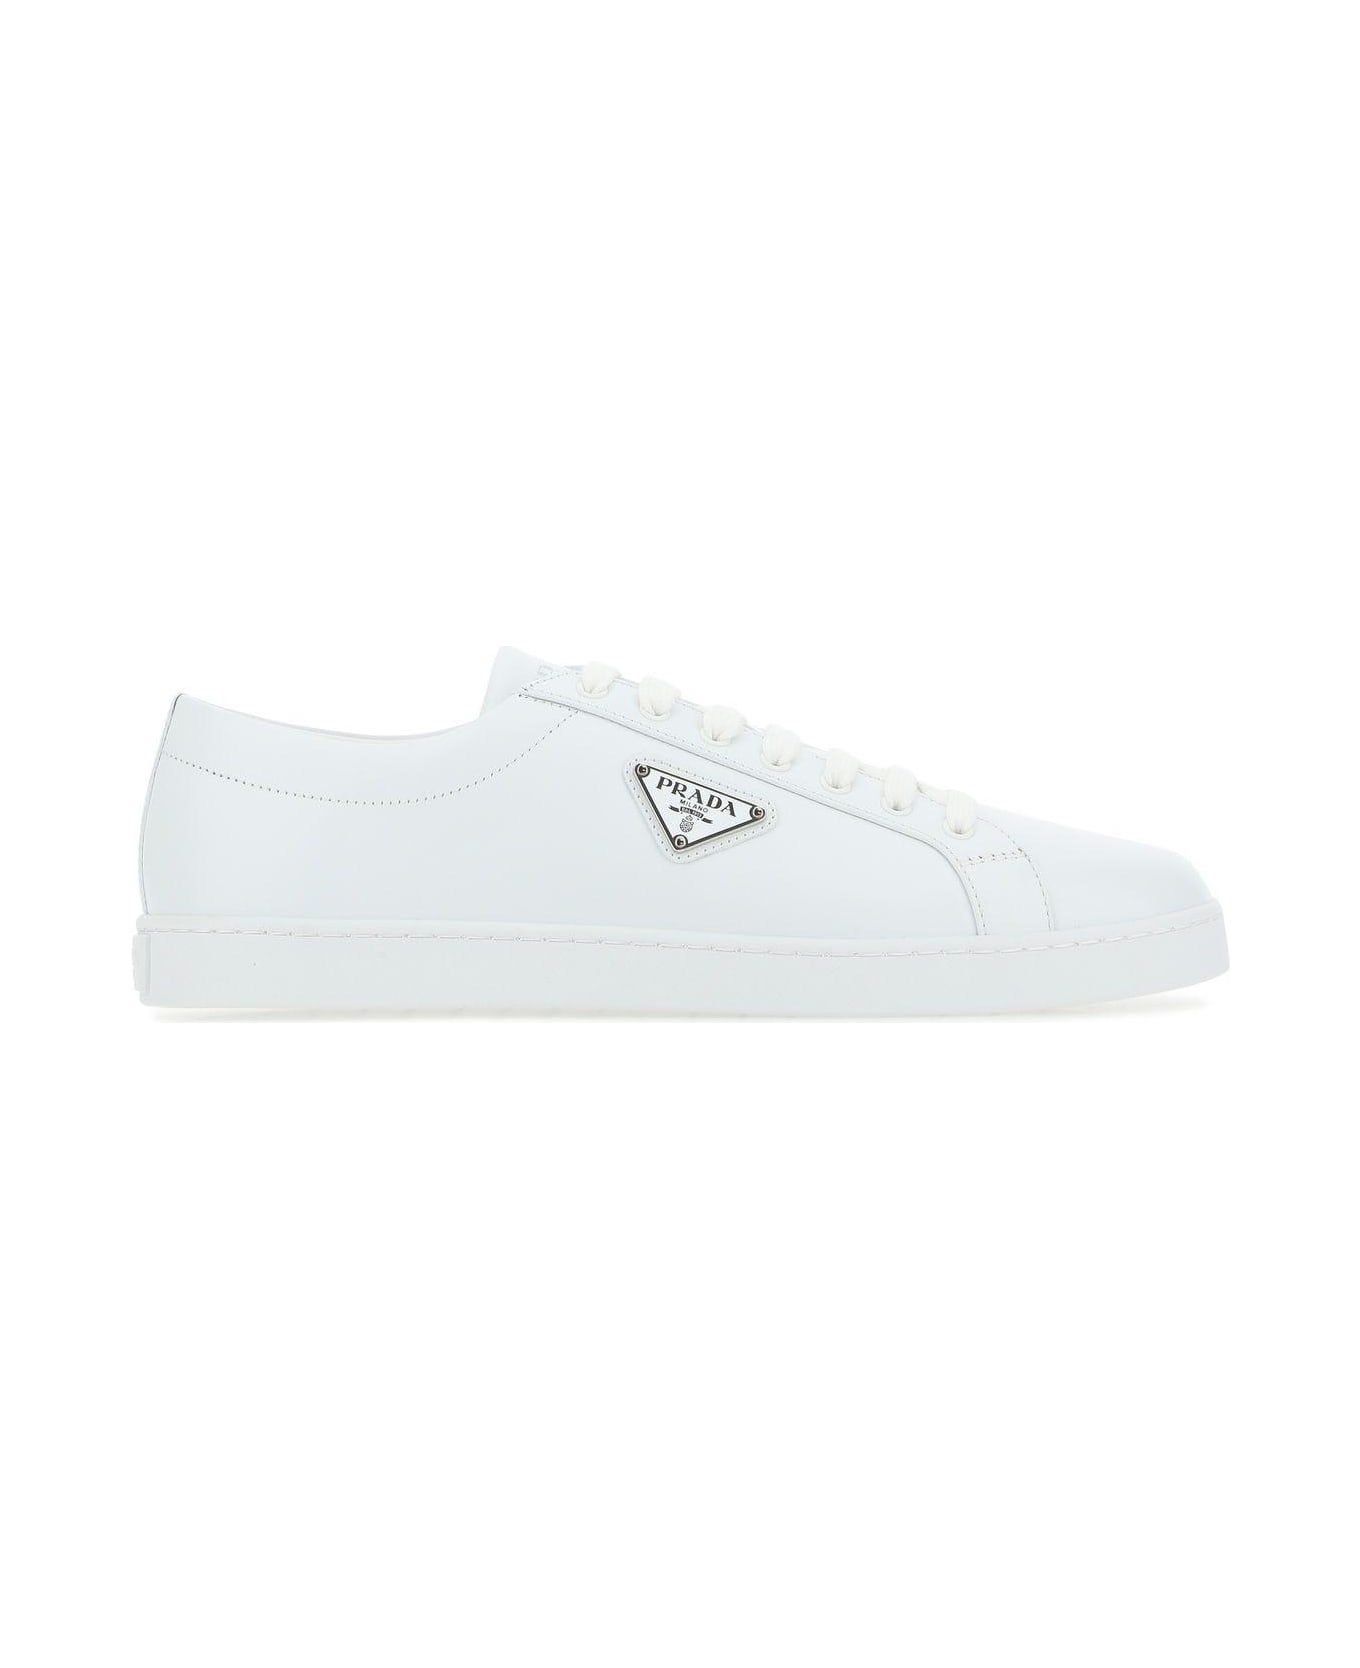 Prada White Leather Sneakers - Bianco スニーカー